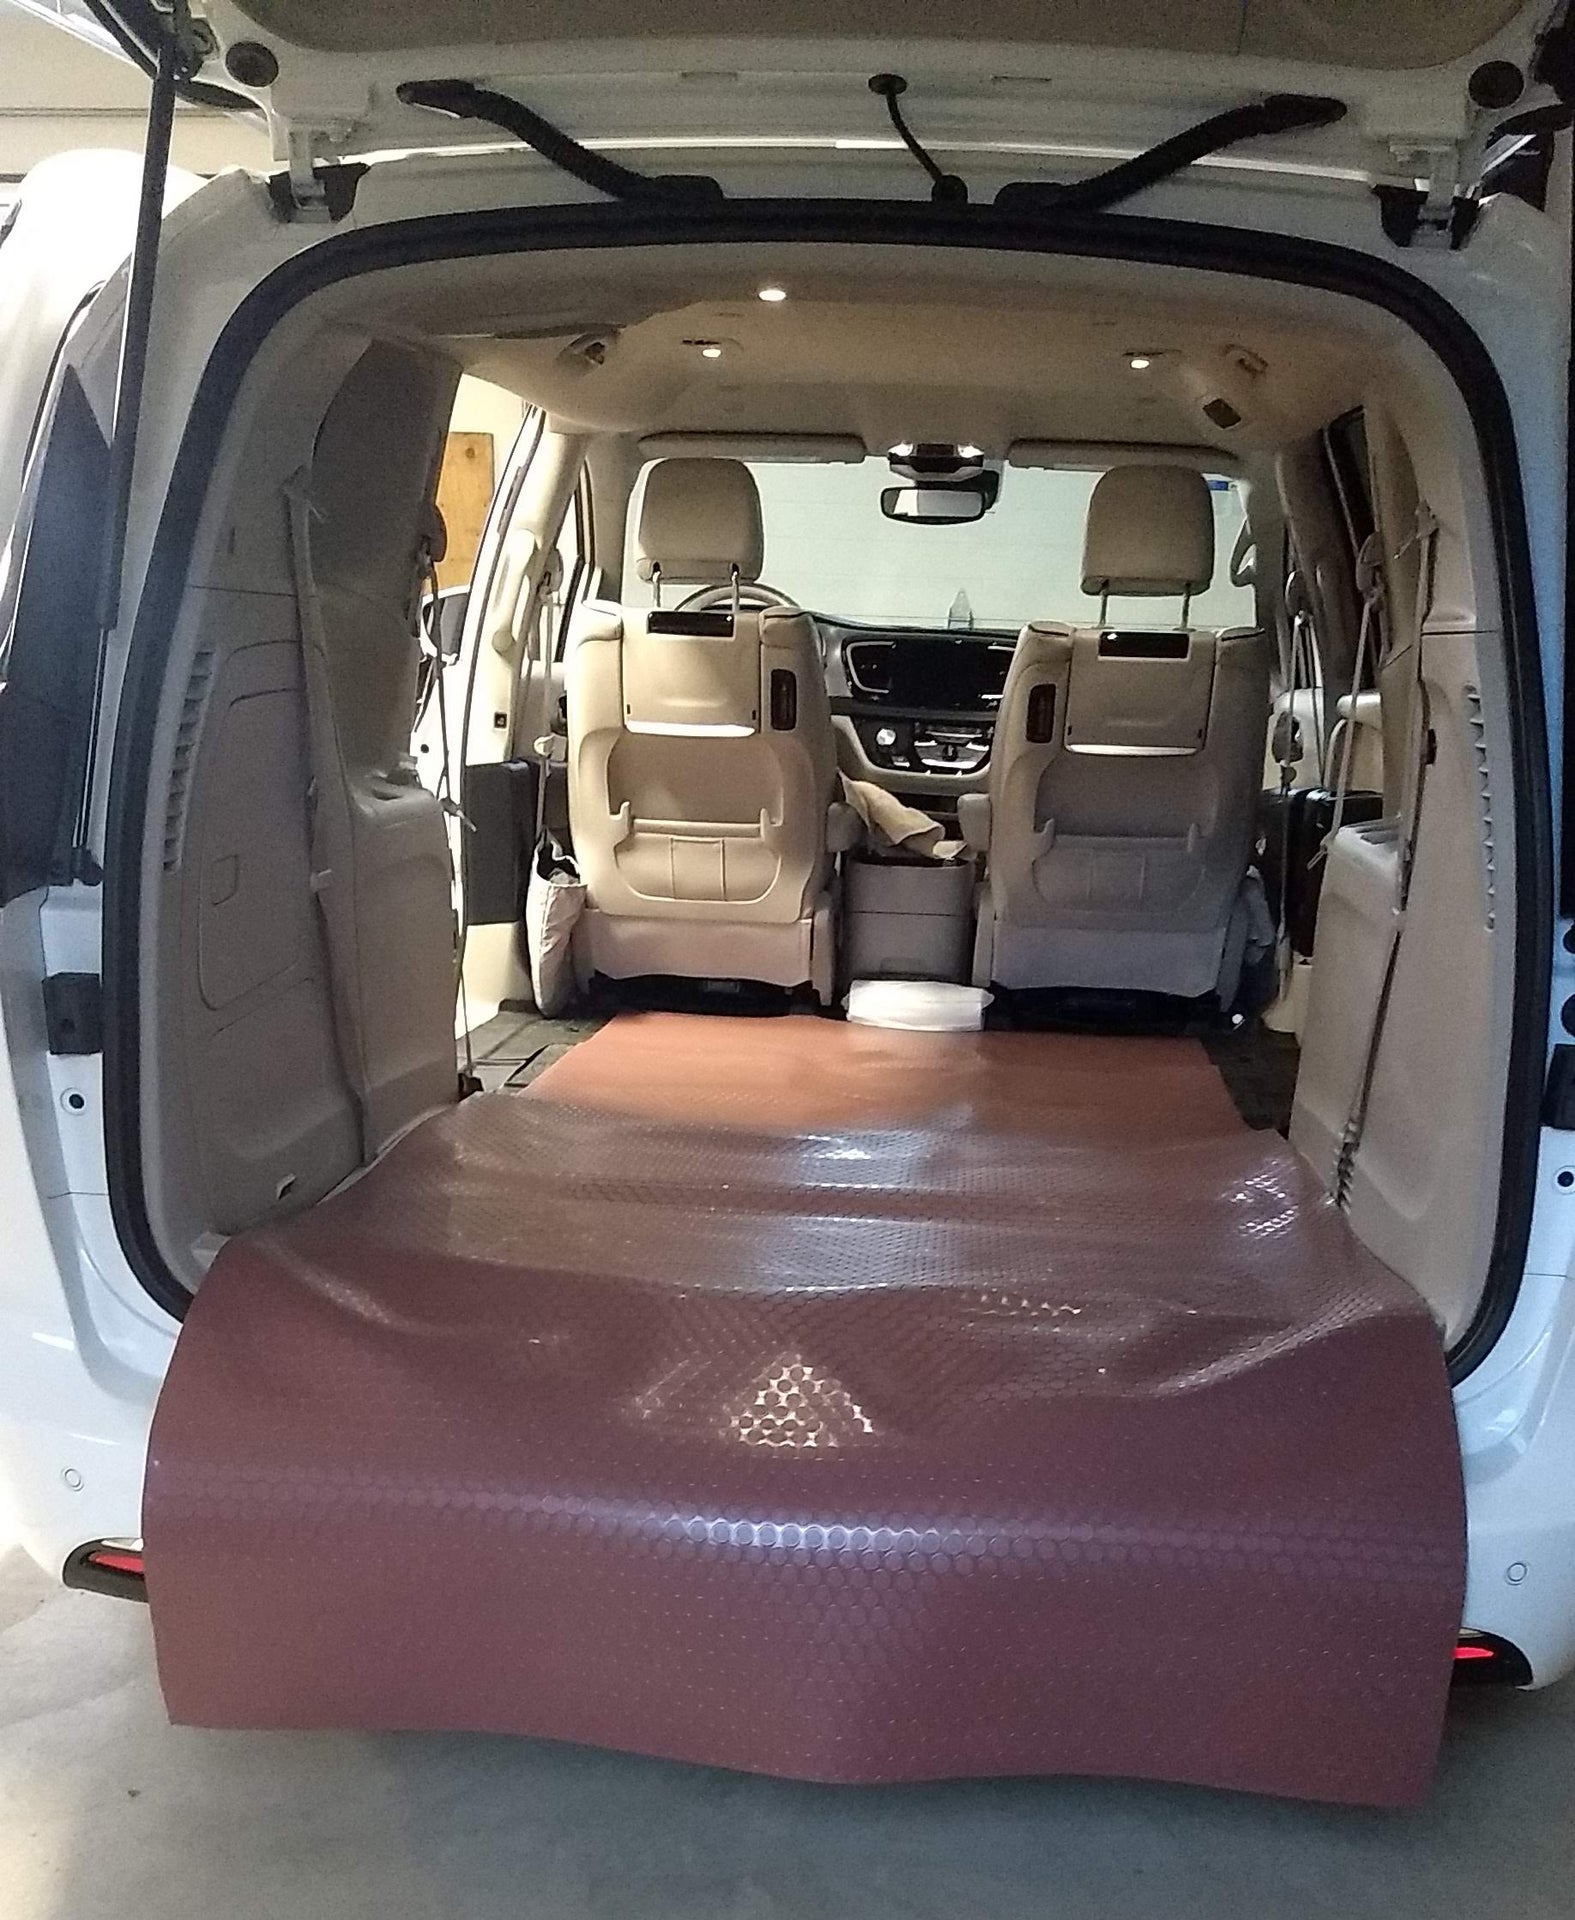 2018 Pacifica Hybrid Cargo Floor Dimensions Behind Front Seats 2017 Chrysler Minivan Forums